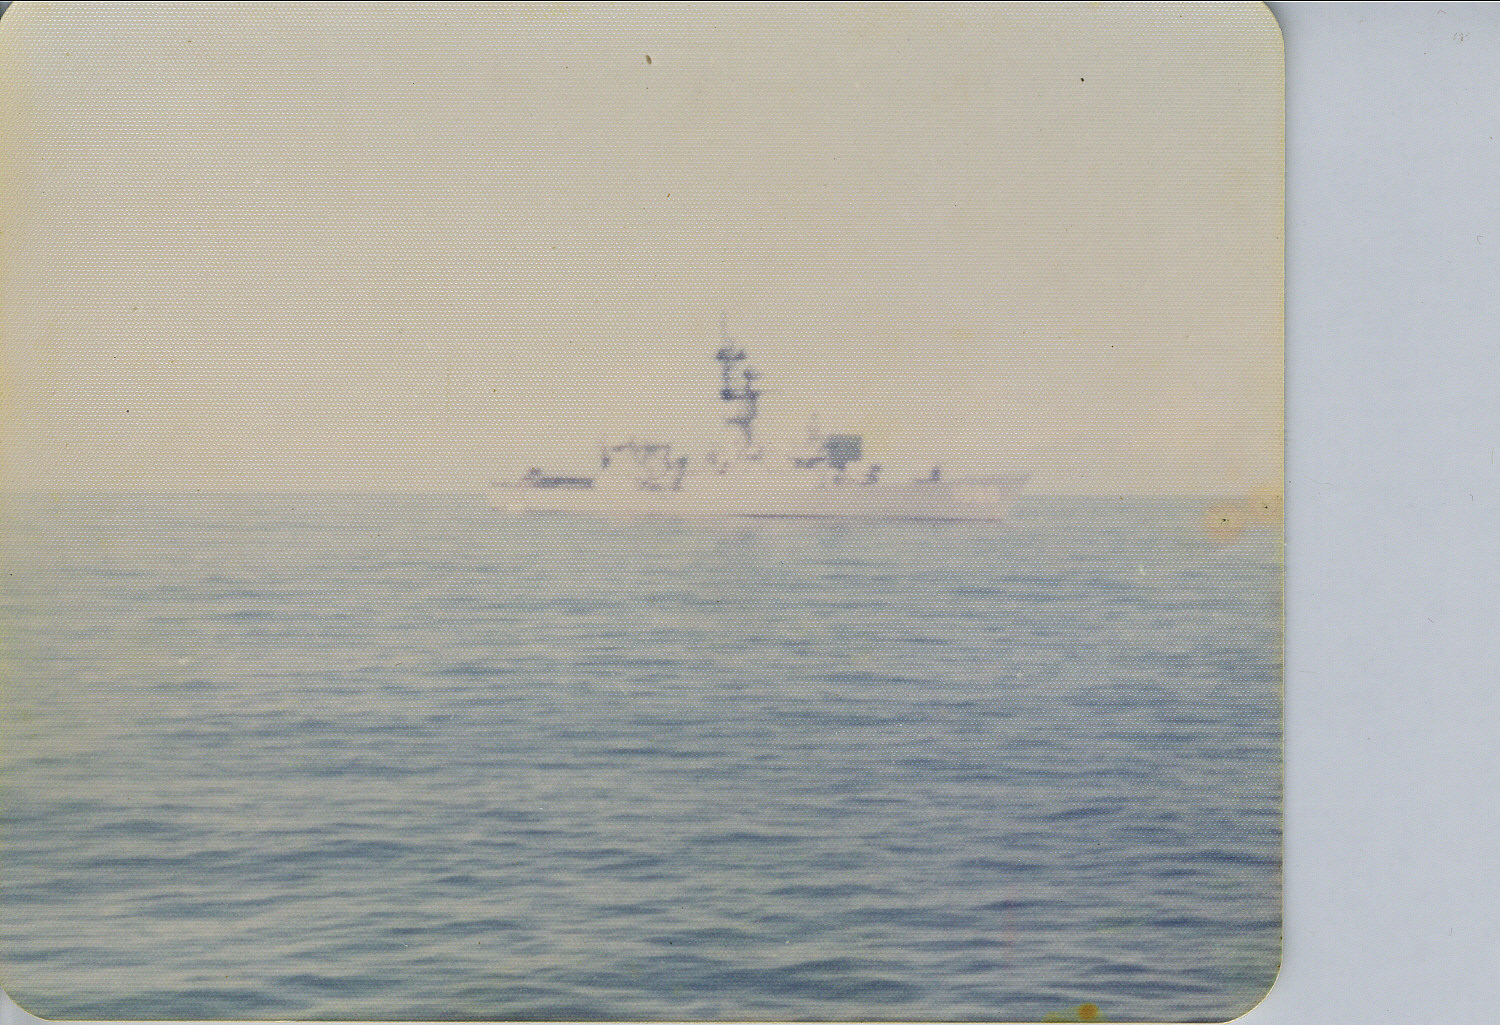 1974 shipmates